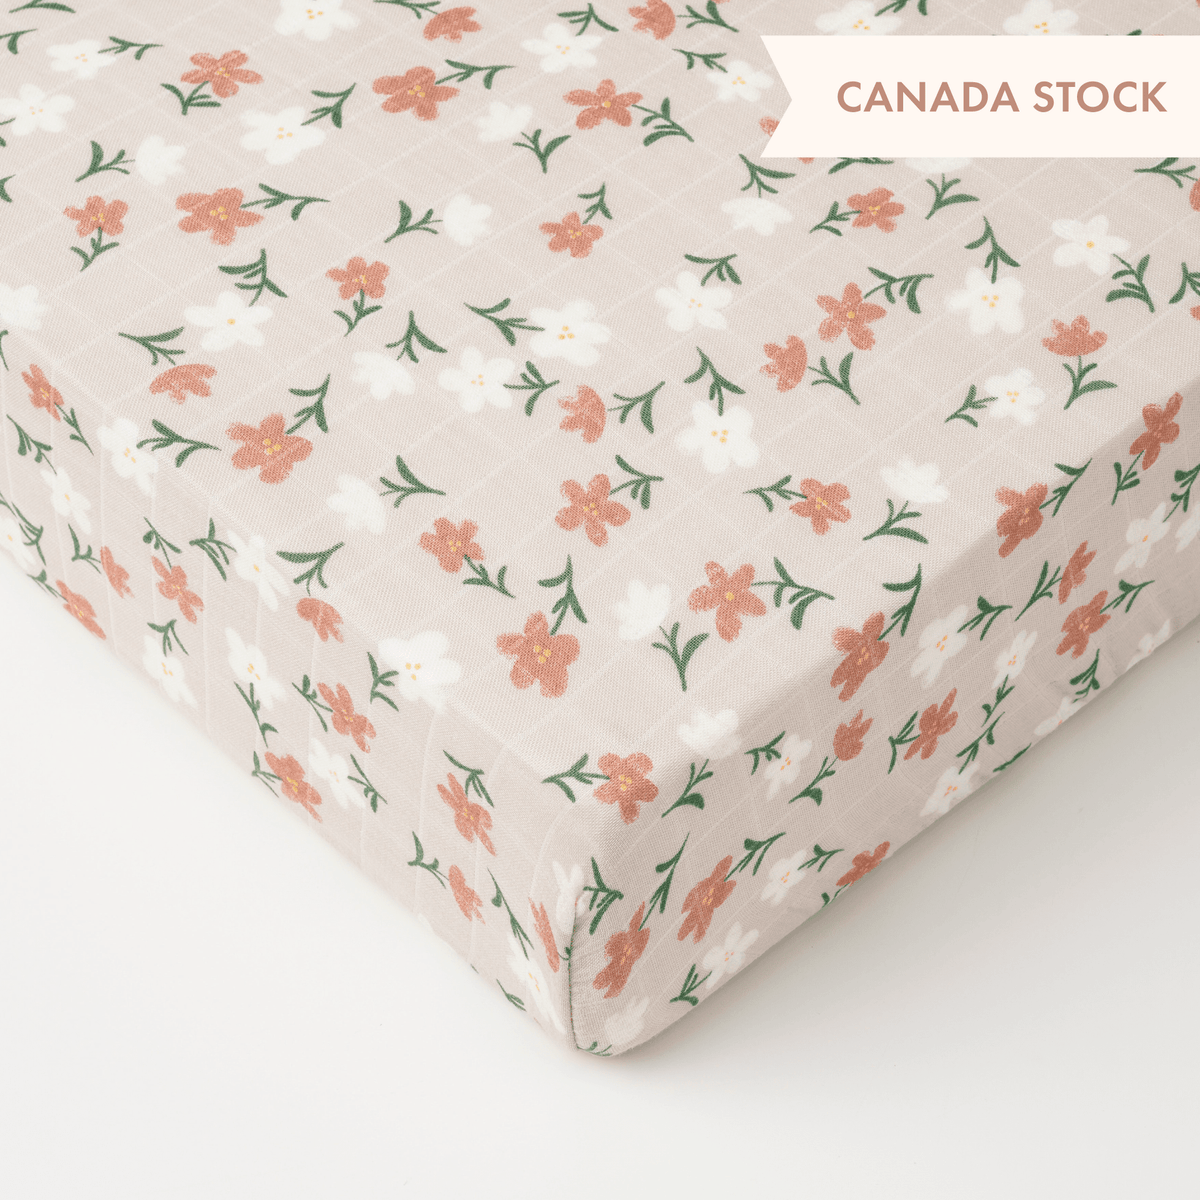 Bassinet Sheet - Floral - Canada Stock